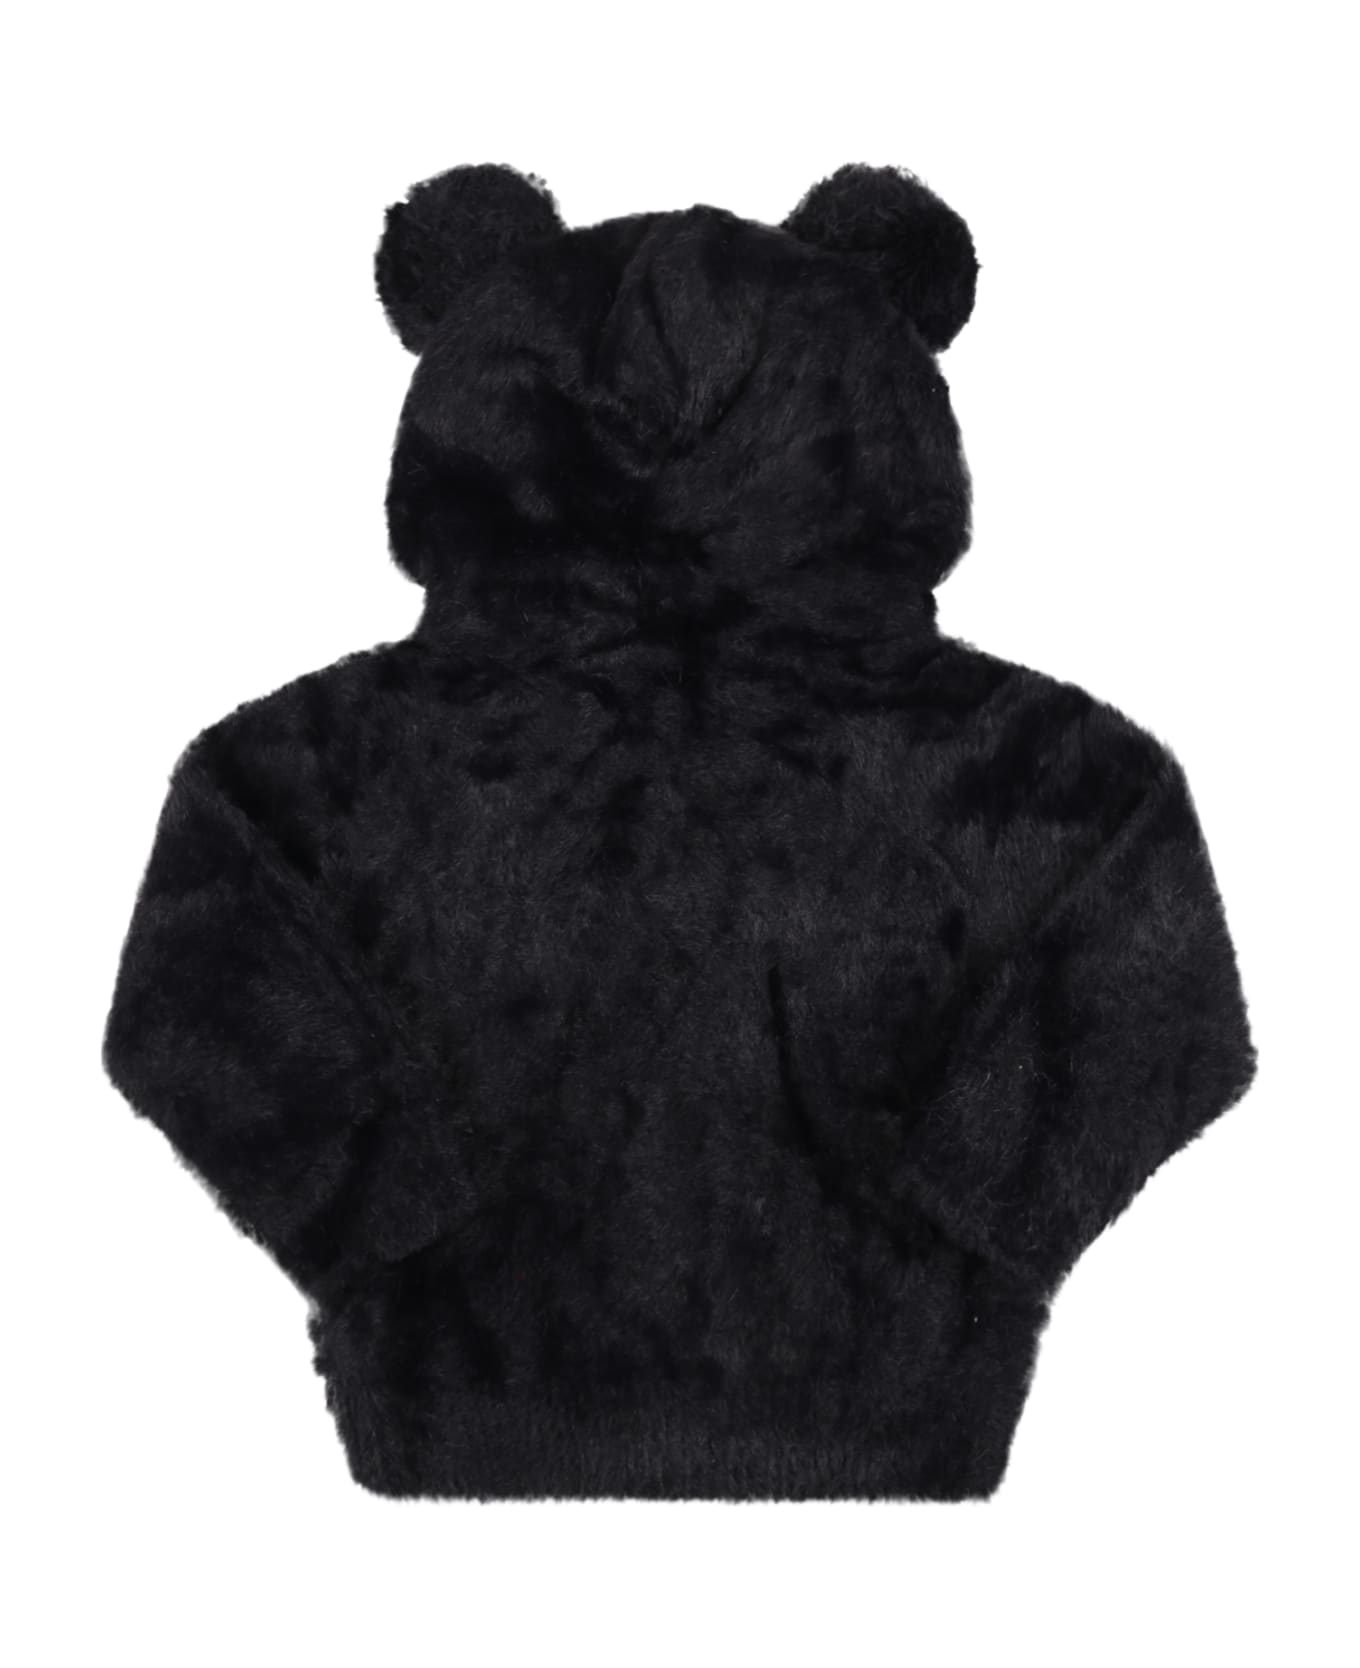 Chiara Ferragni Black Sweater For Baby Girl - Black